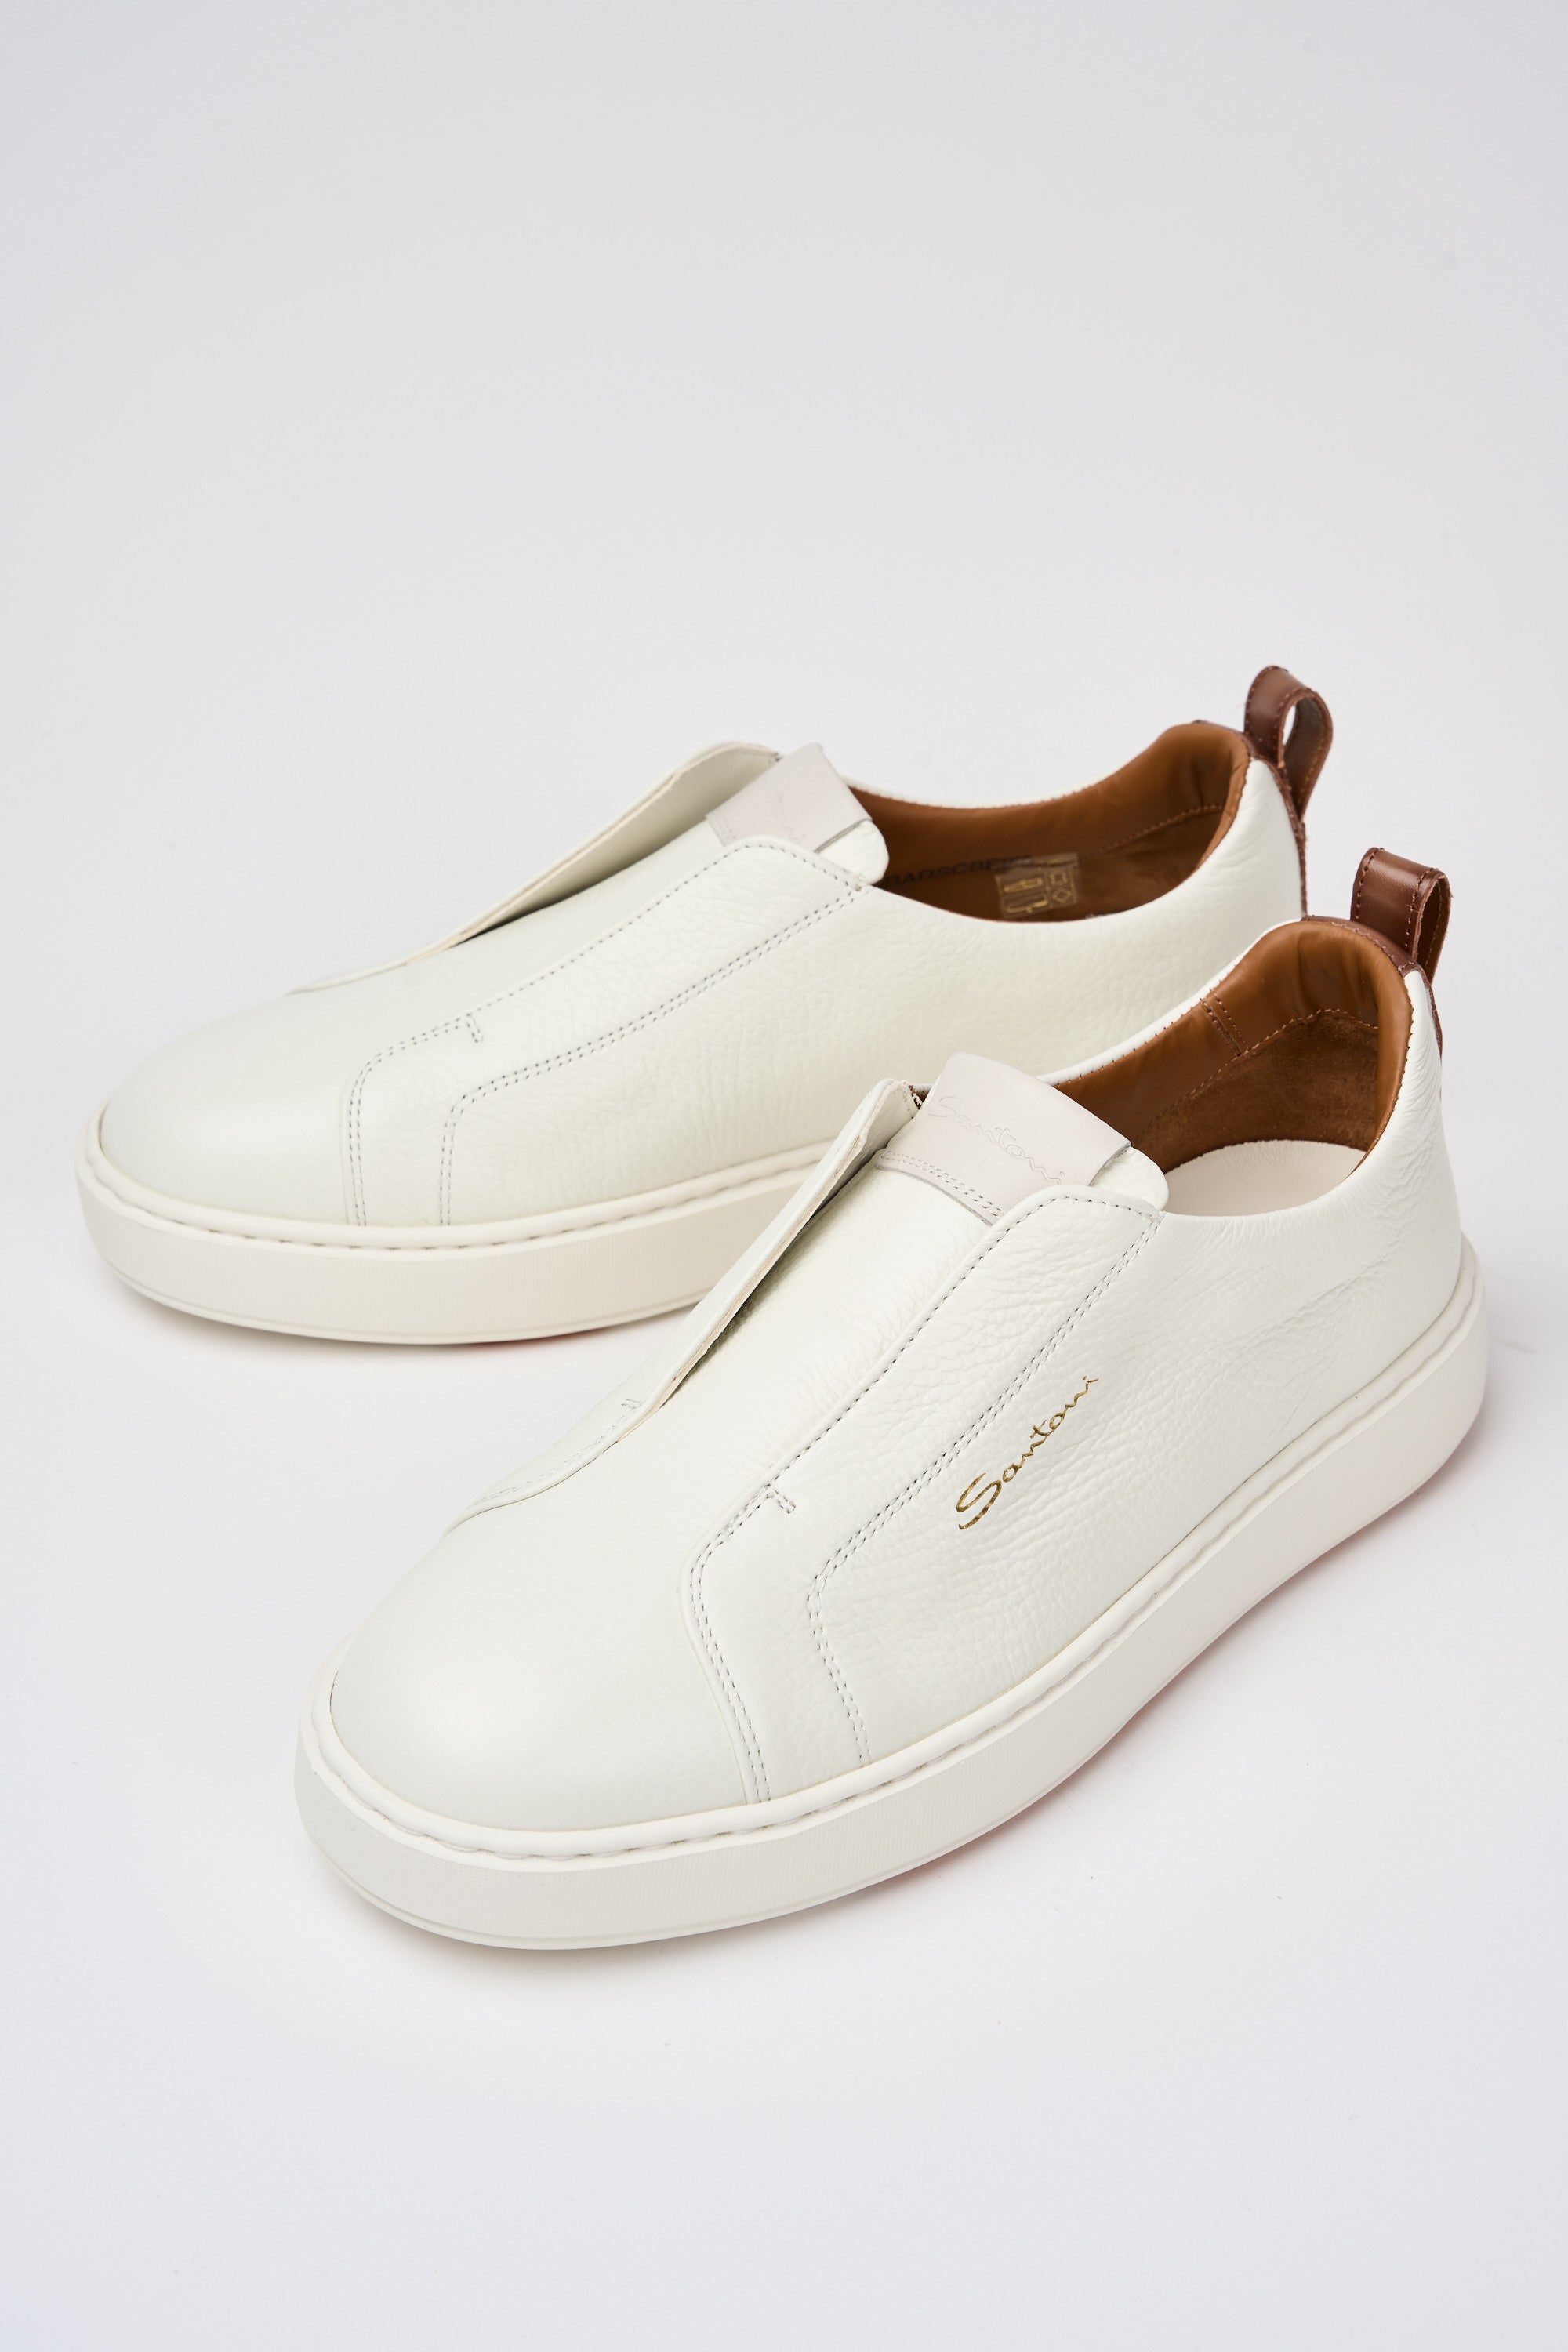 Santoni Slip On Leather Sneakers White-6